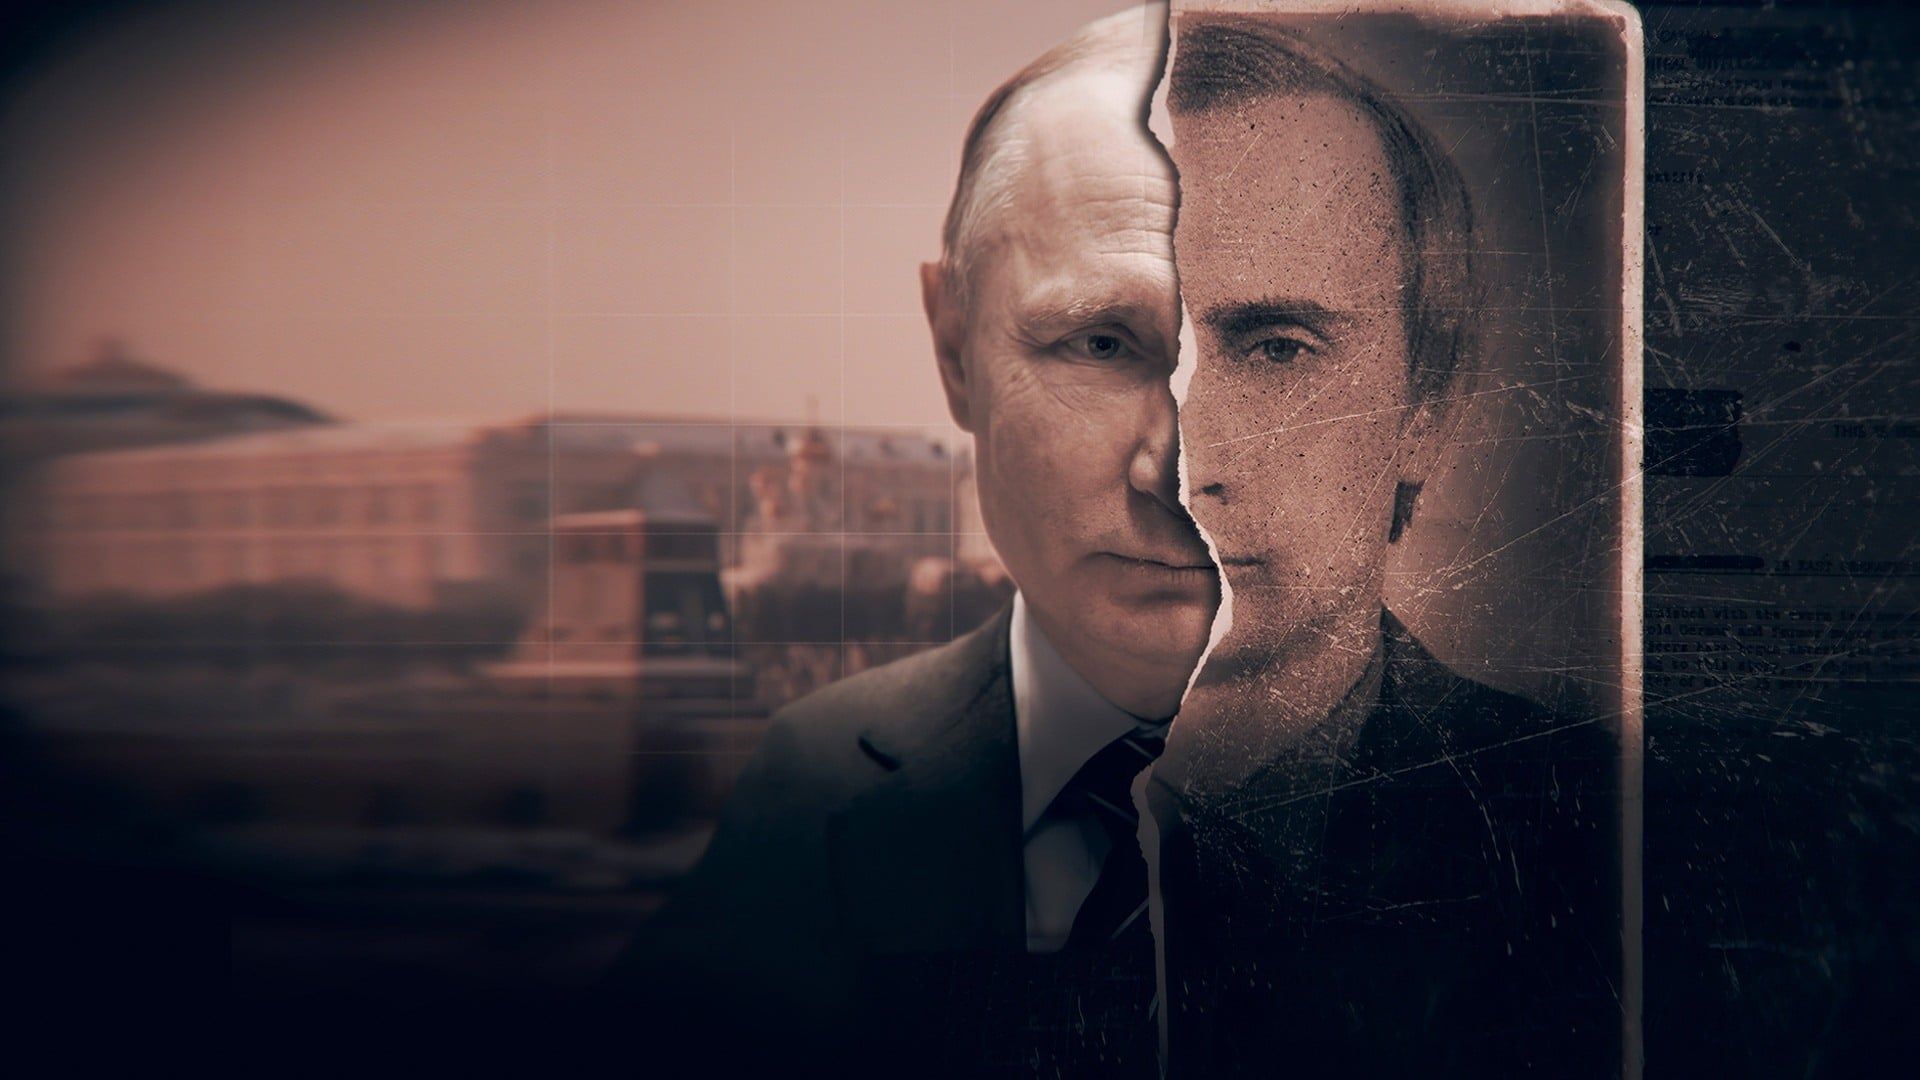 Putin: A Russian Spy Story background